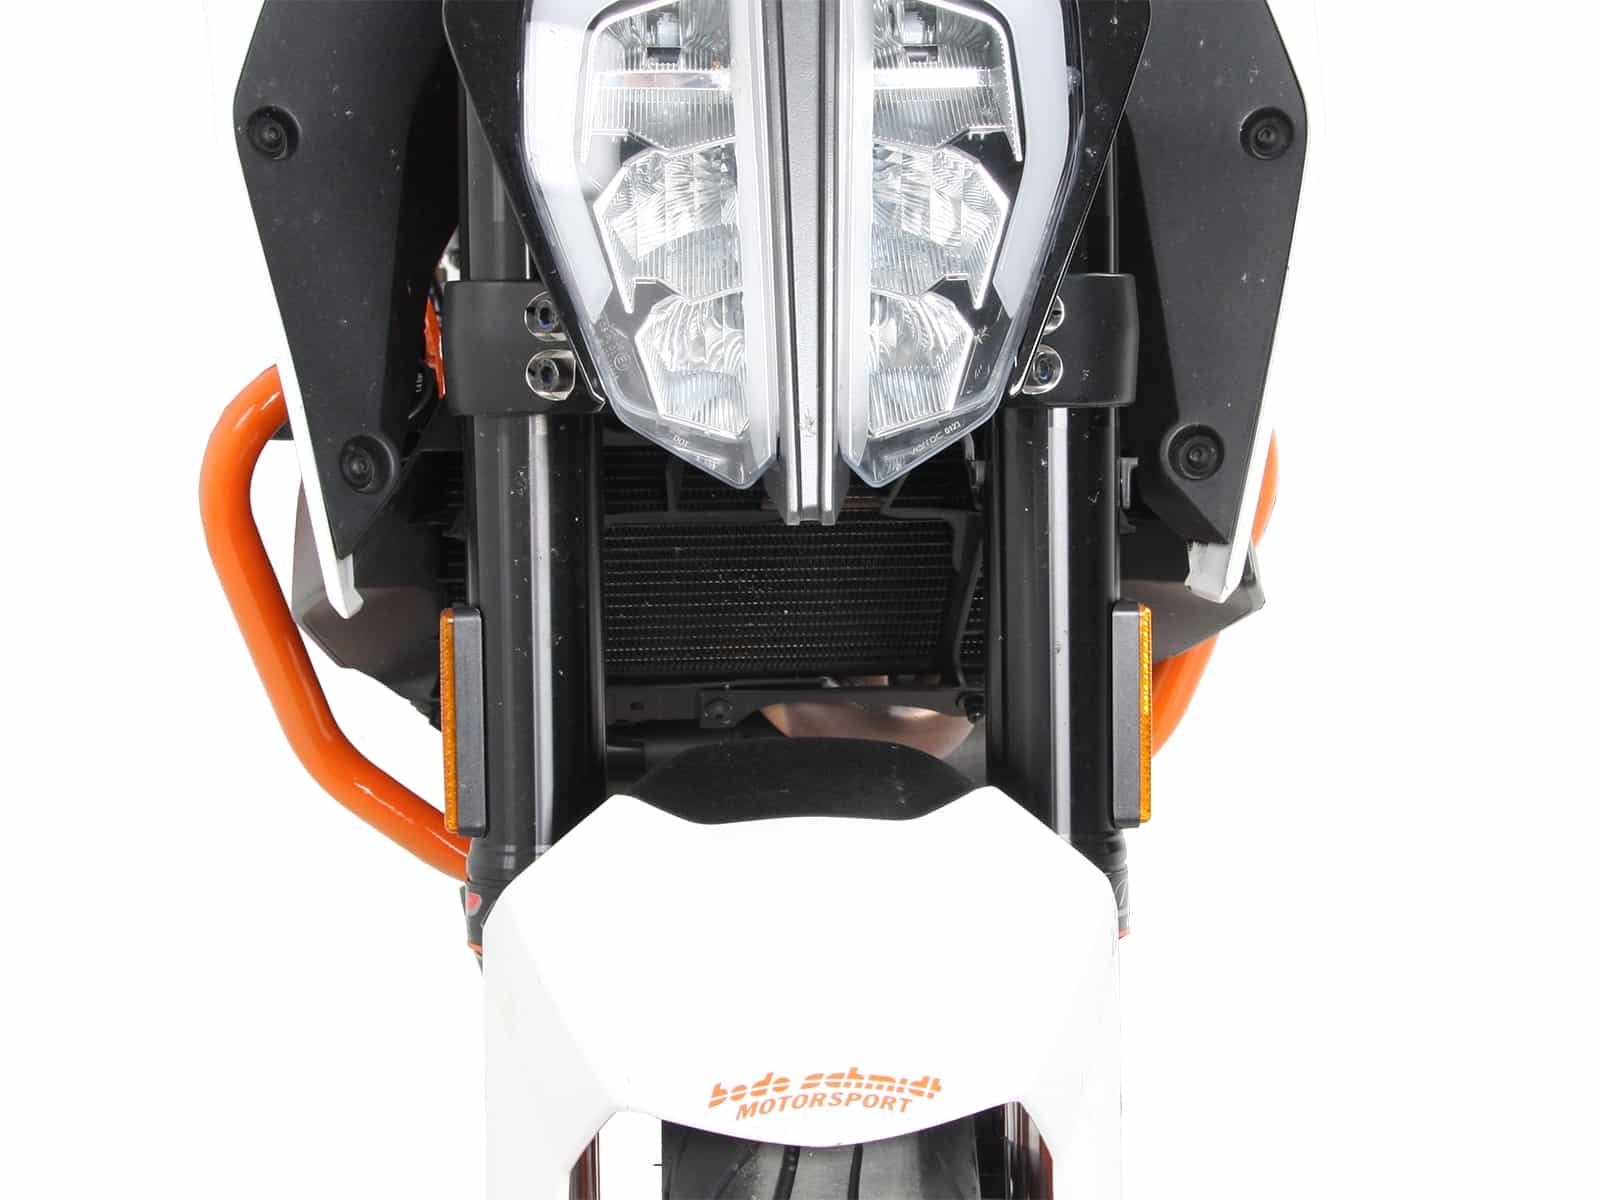 Motorcycle Headlight Protector KTM 390 Duke Light Guard Kit 2017+